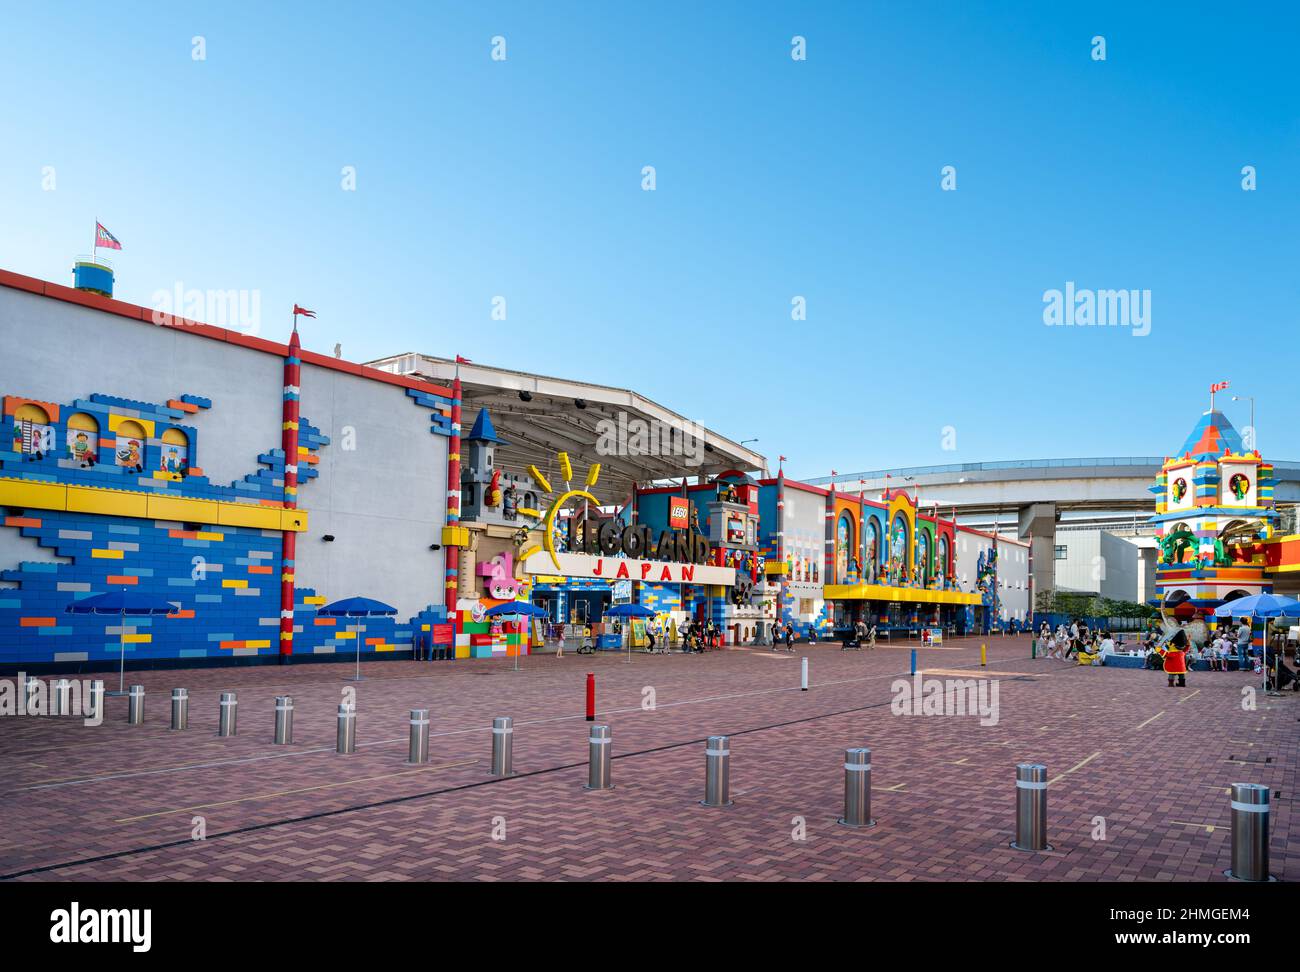 Main entrance gate to Legoland Japan. Stock Photo